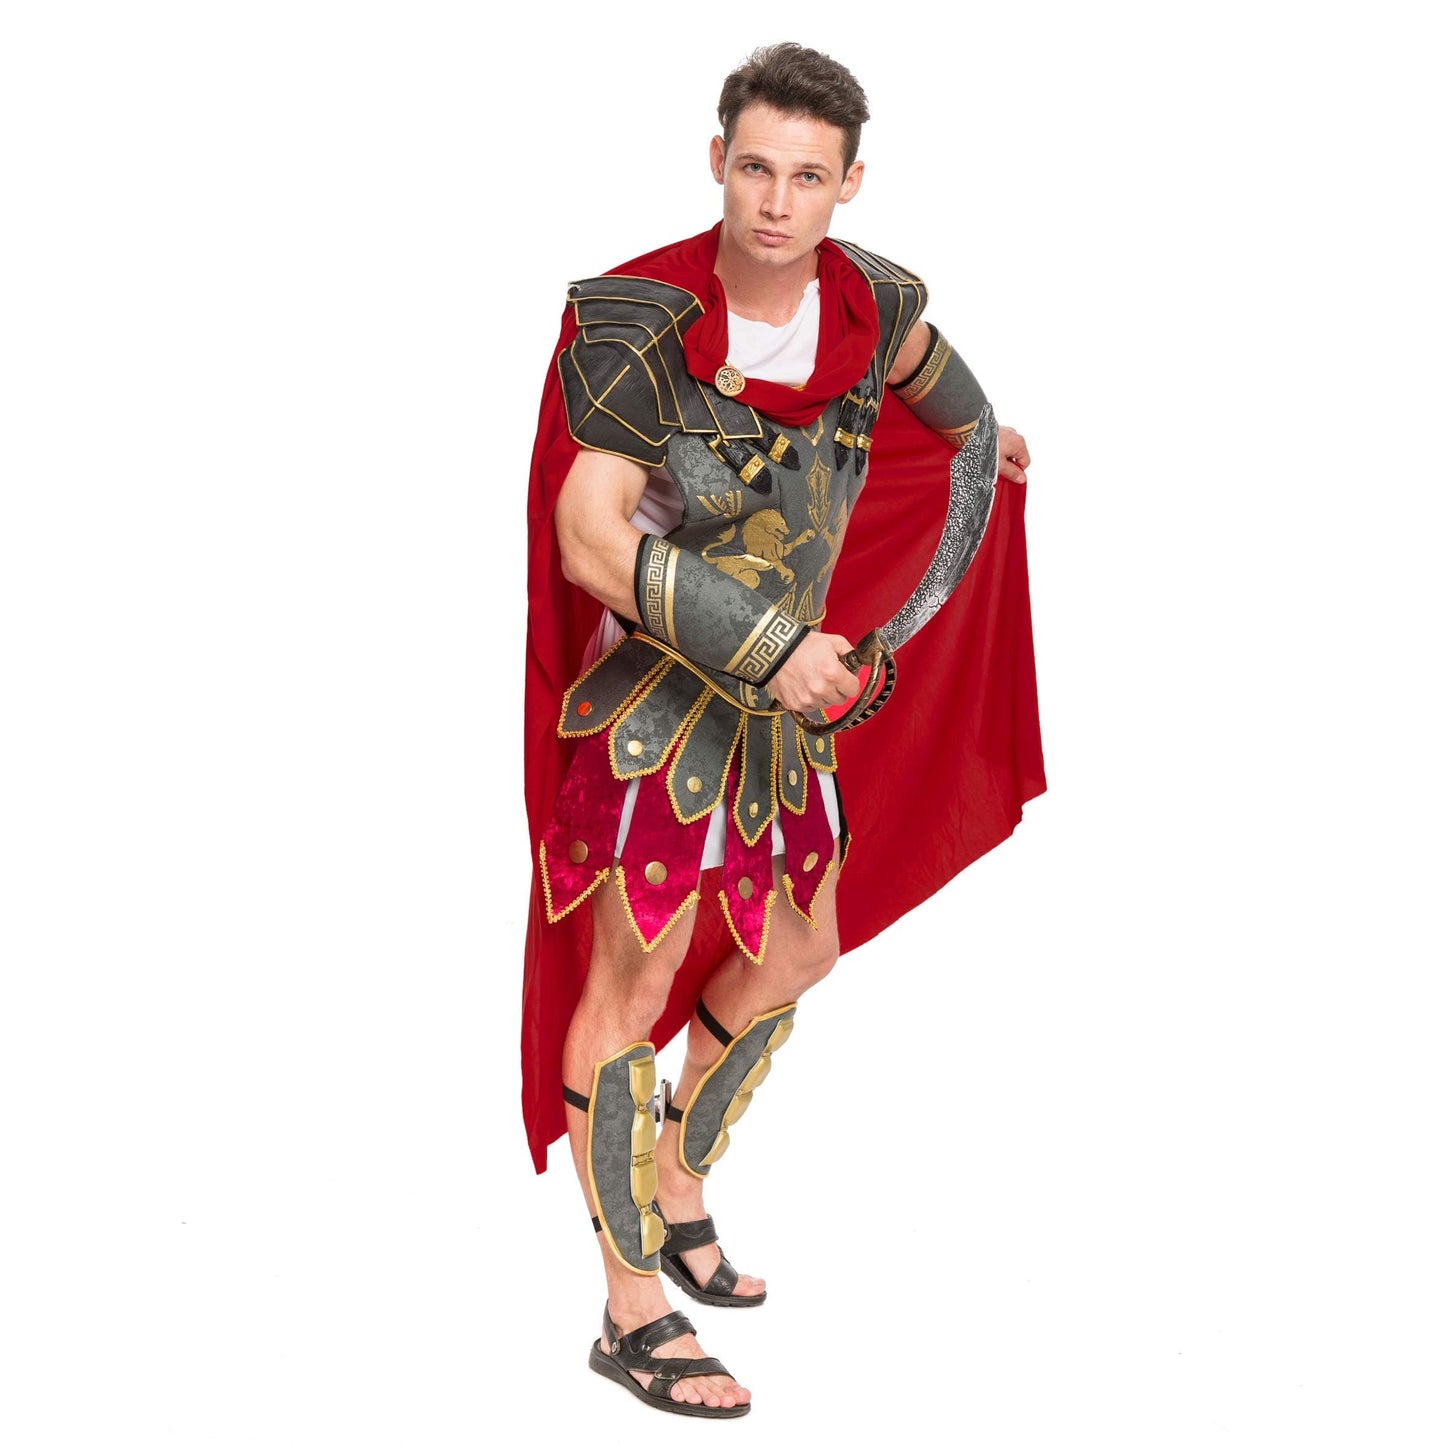 Spooktacular Creations Brave Men’s Roman Gladiator Costume Set for Halloween Audacious Dress Up Party Standard